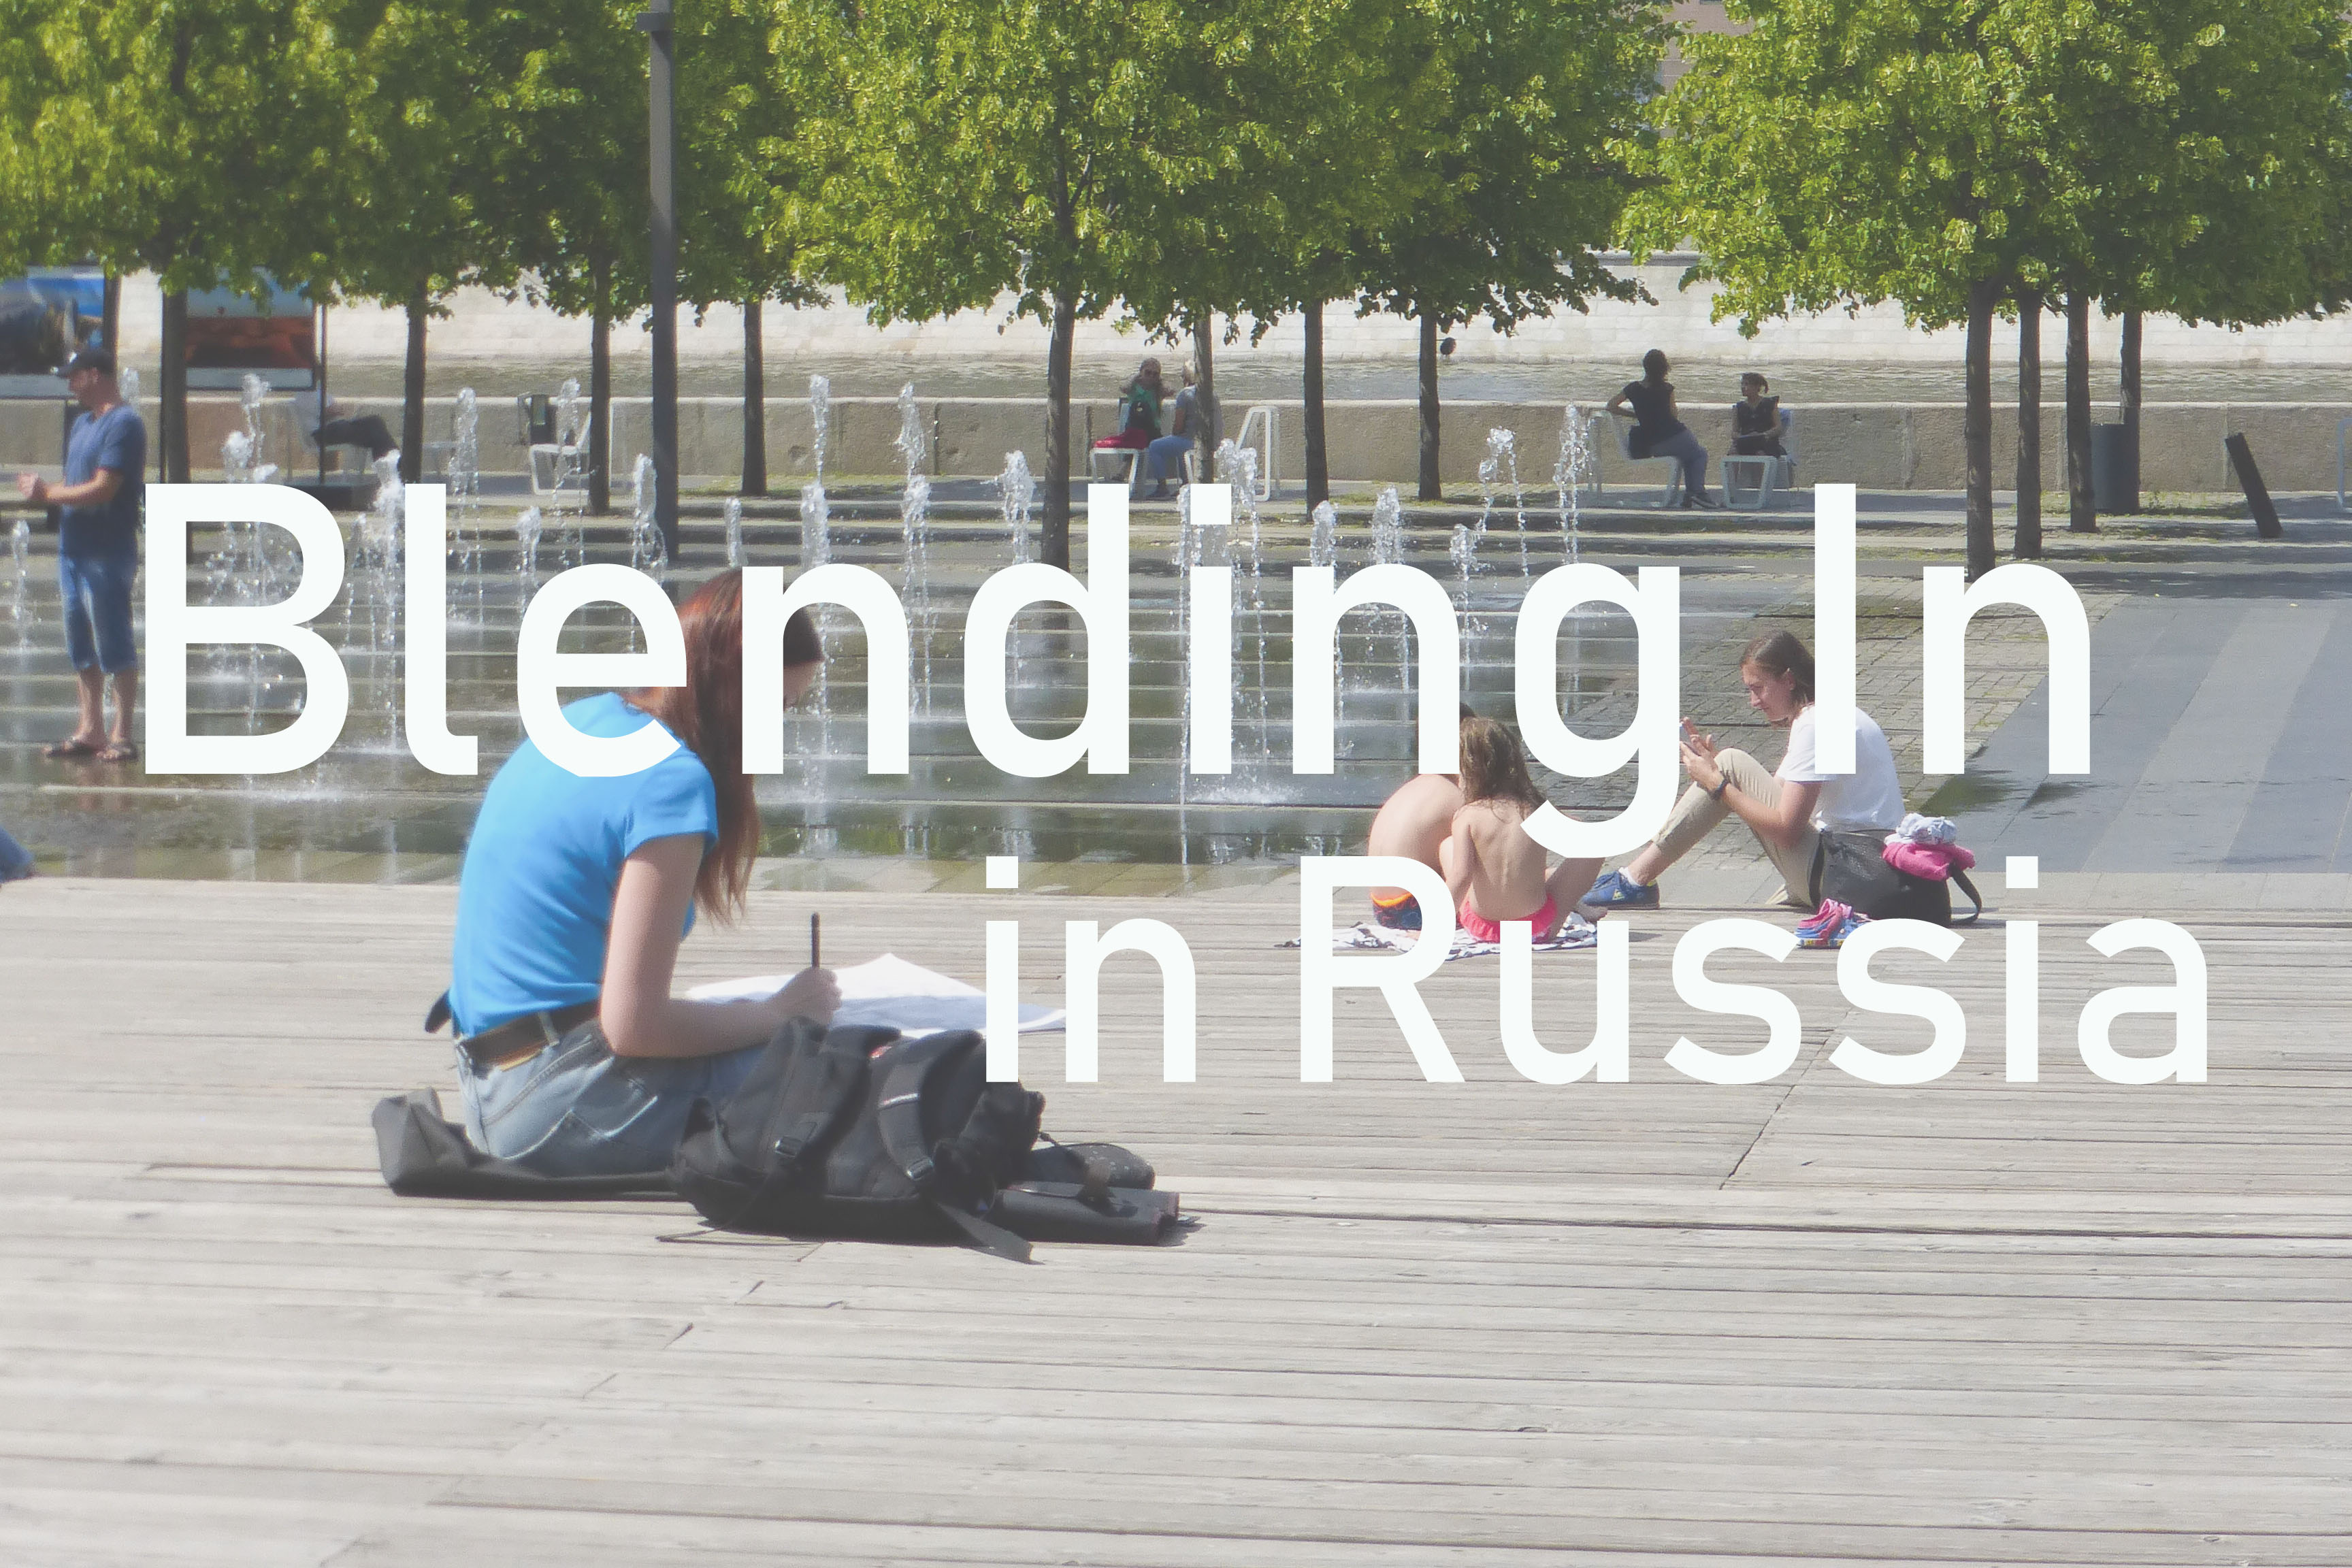 Blending In Russia